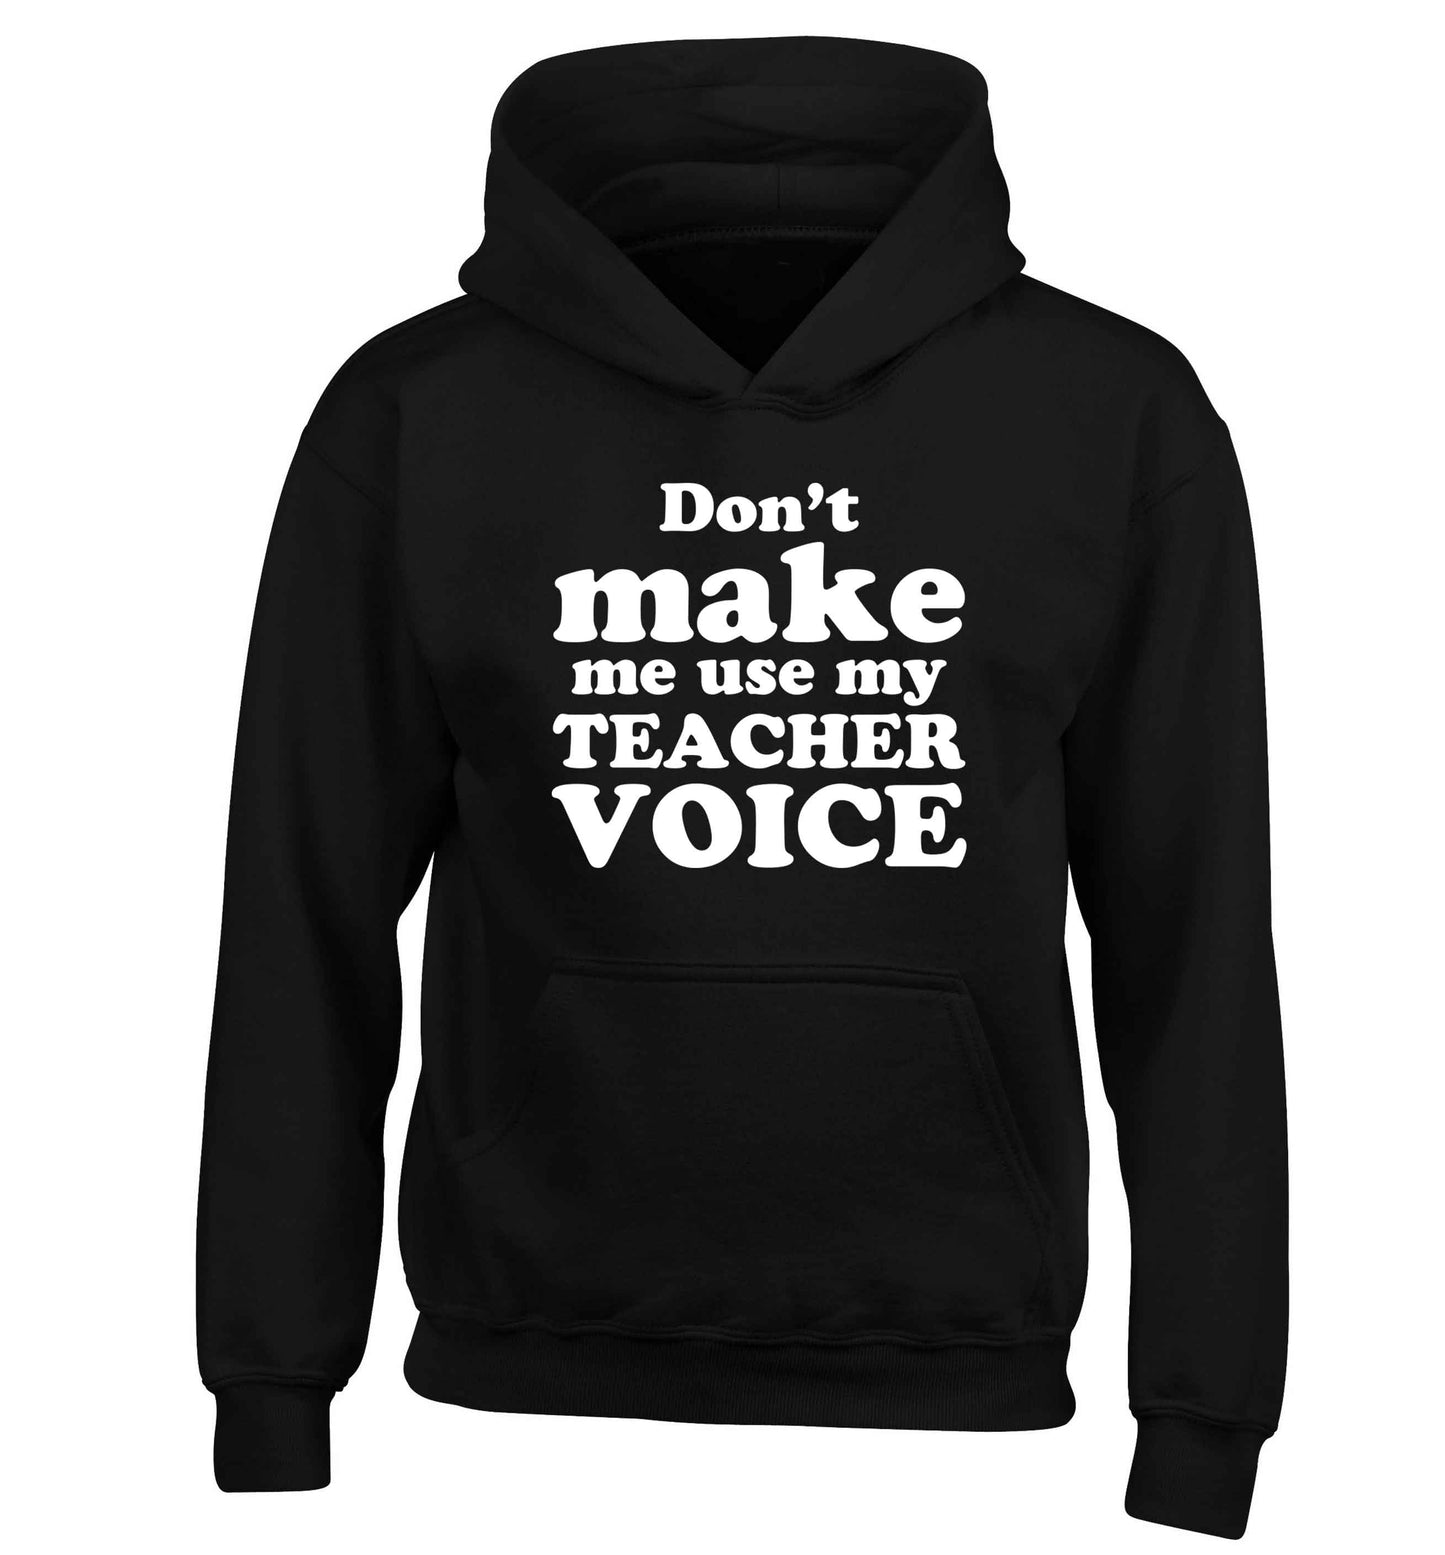 Don't make me use my teacher voice children's black hoodie 12-13 Years